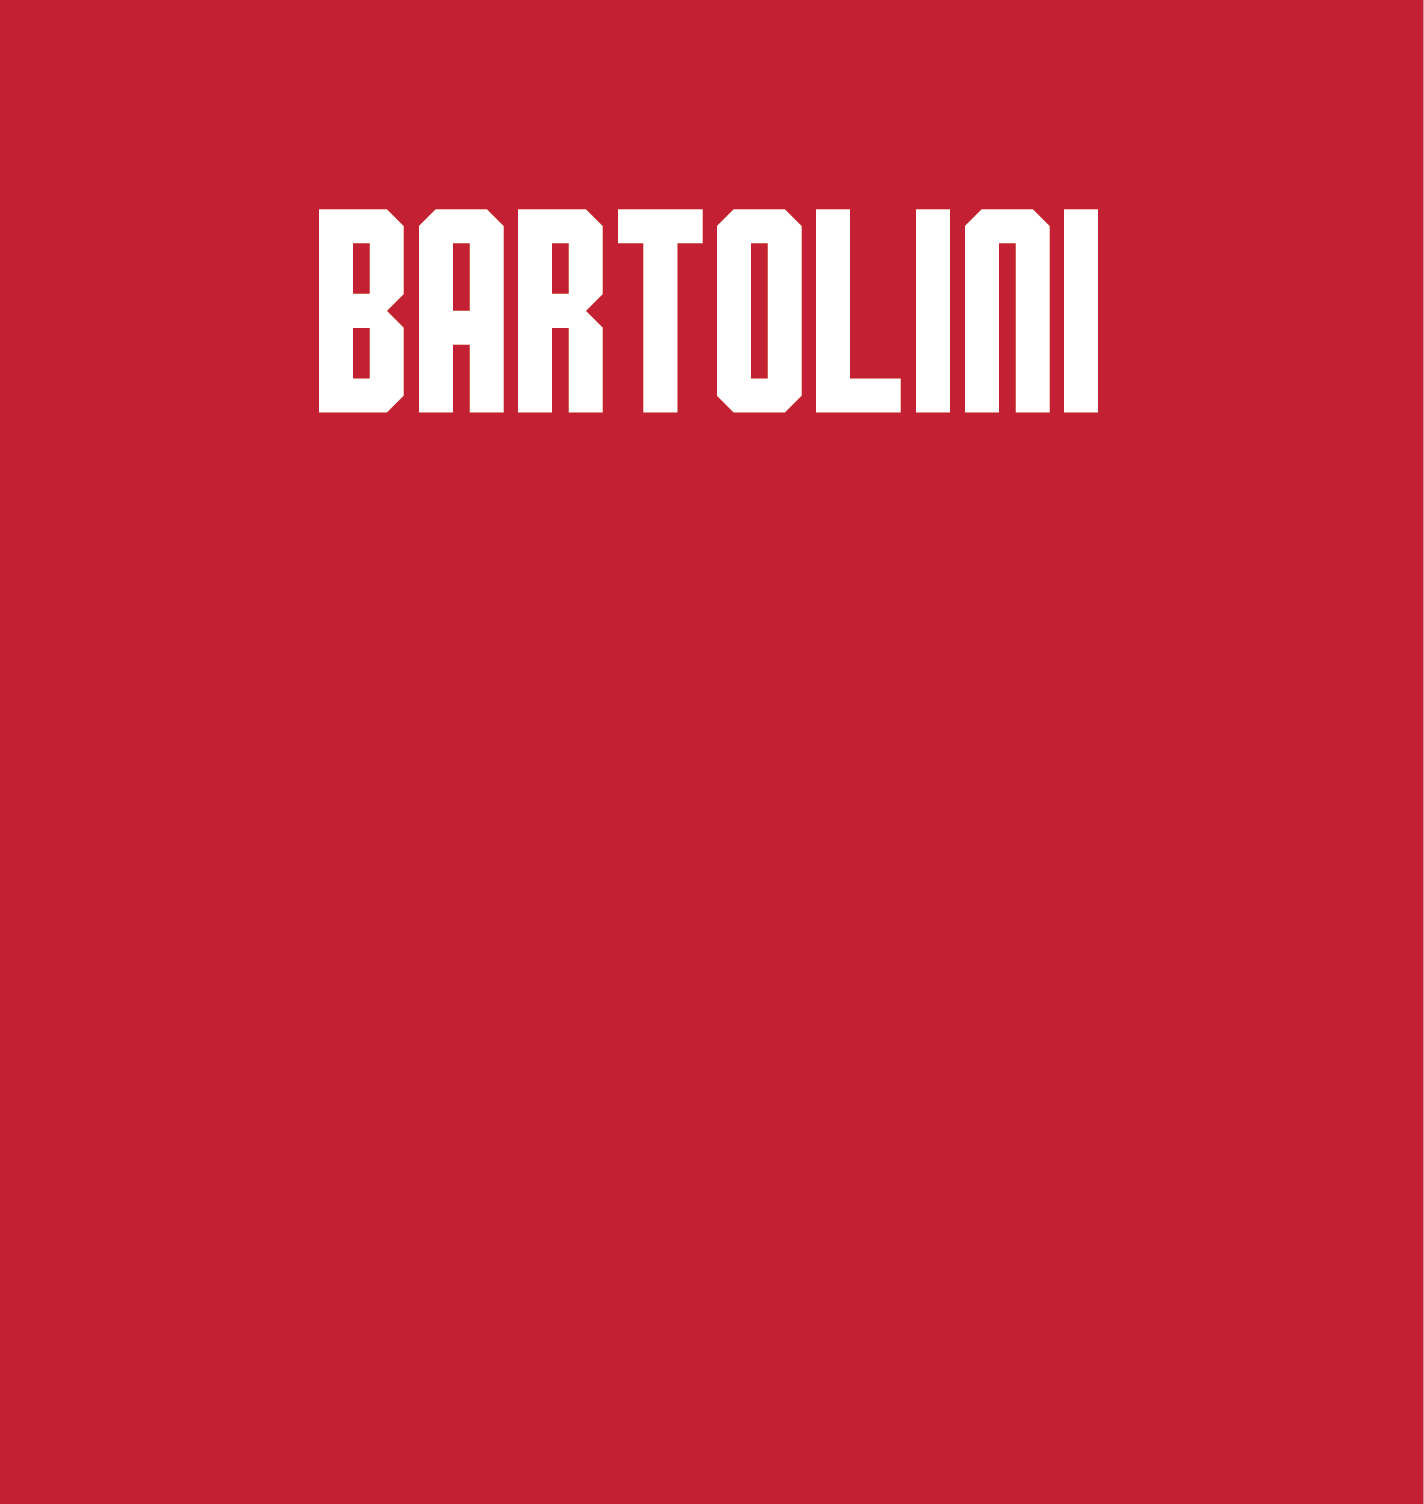 Christian Bartolini